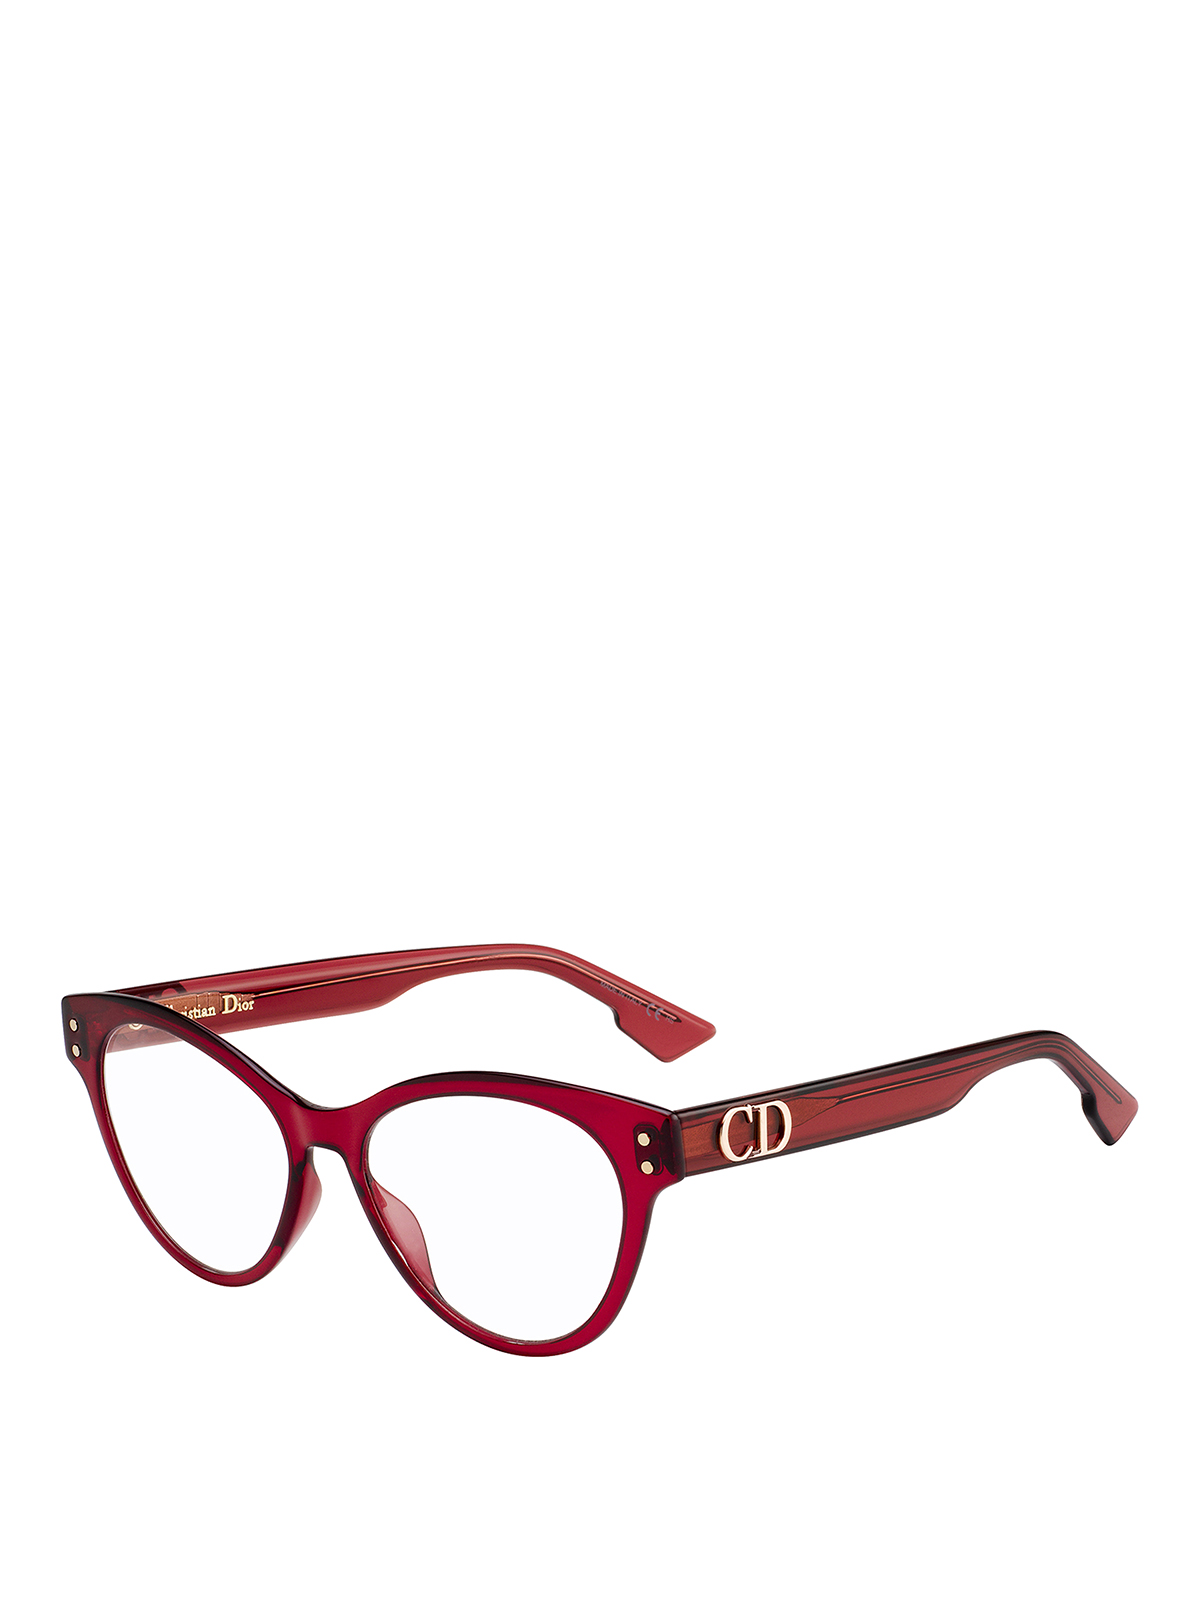 Dior - CD logo cat-eye glasses - عینک 